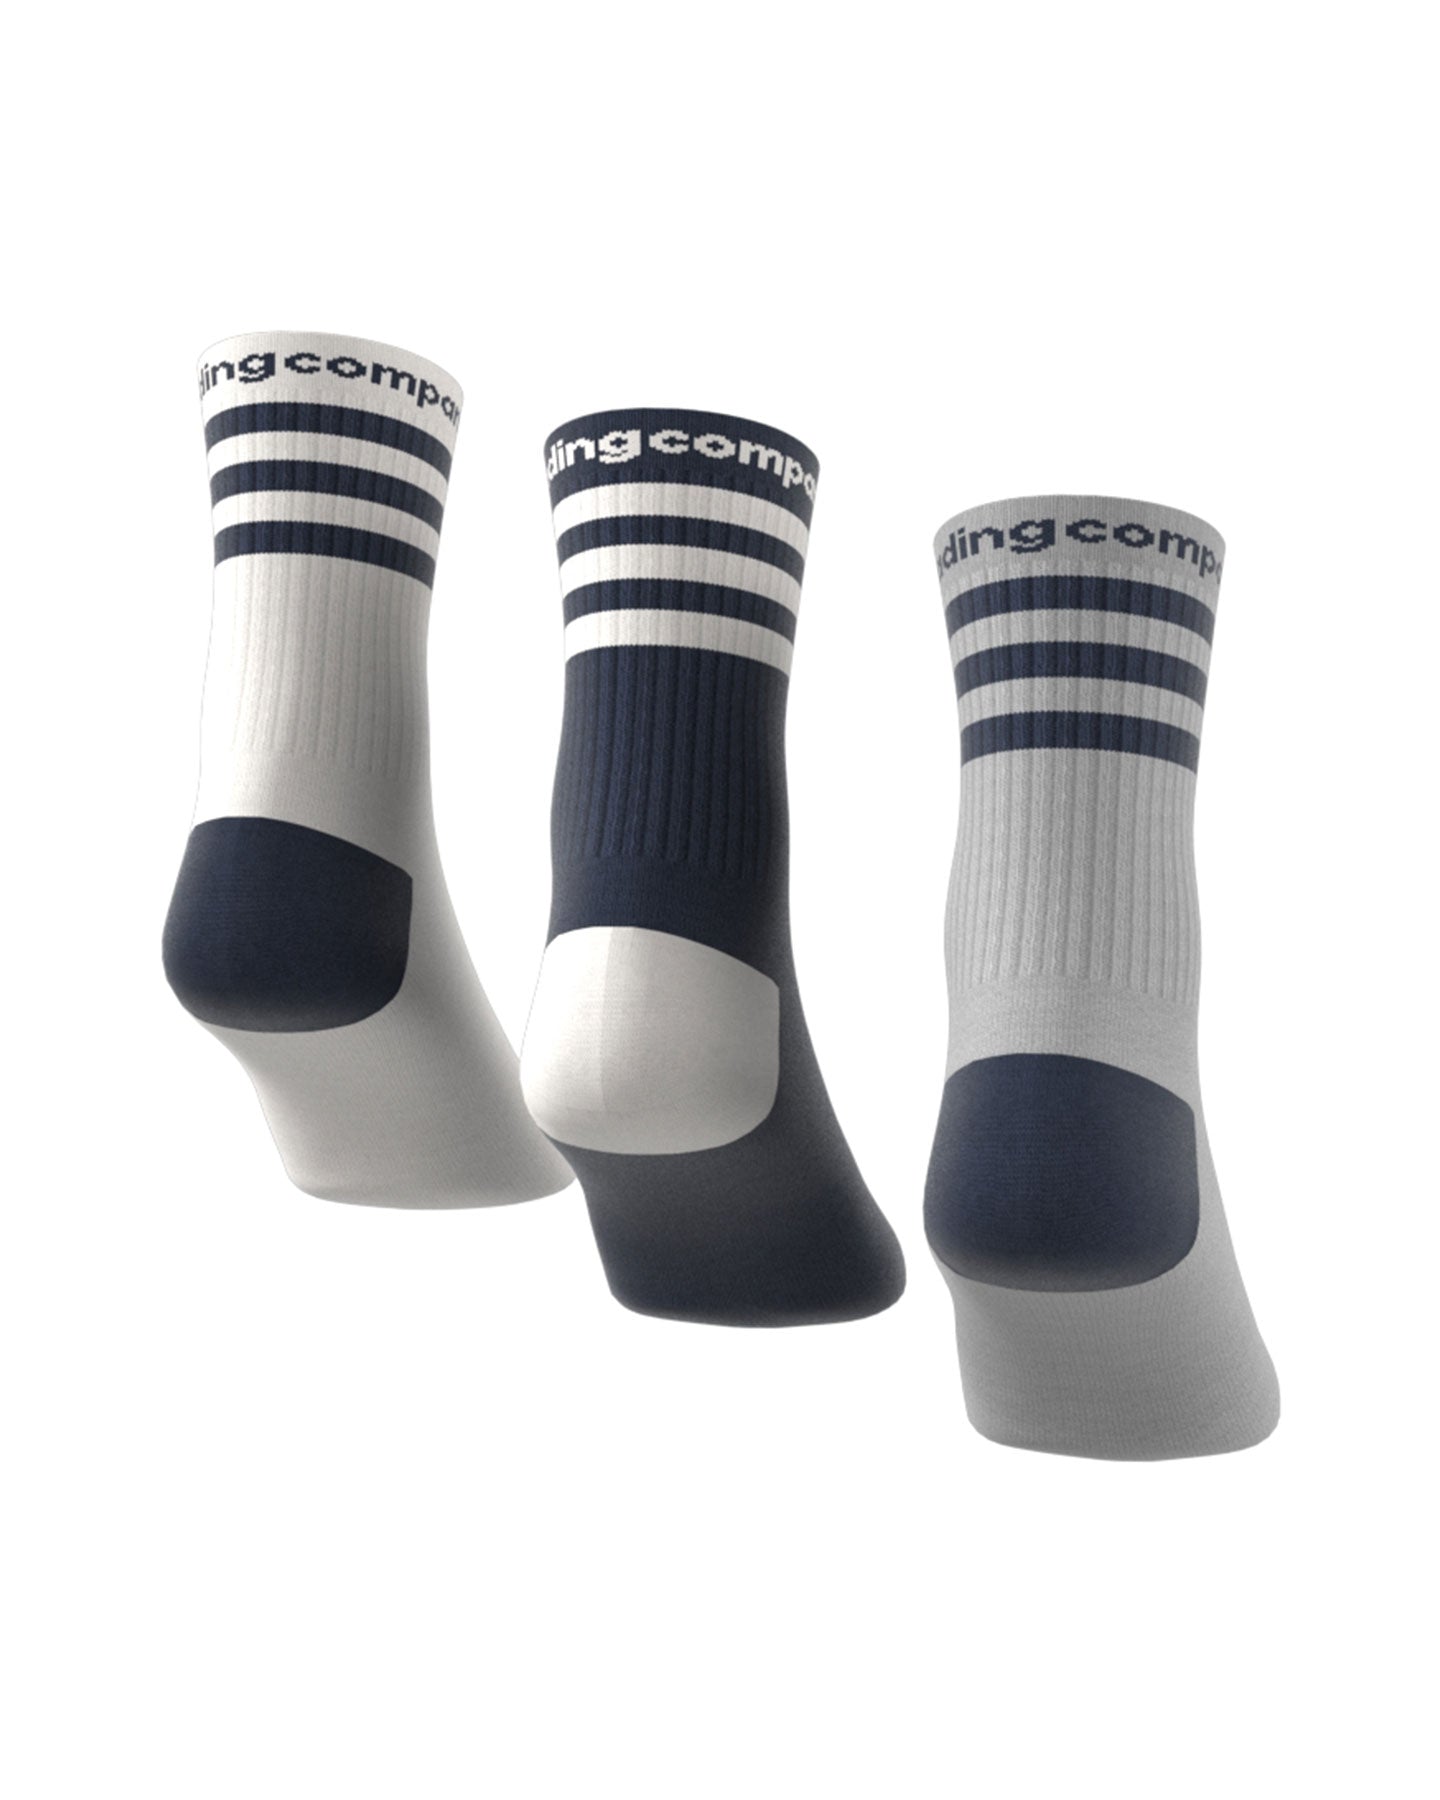 Adidas x POP Sock 3 Pack - White / Navy / Grey